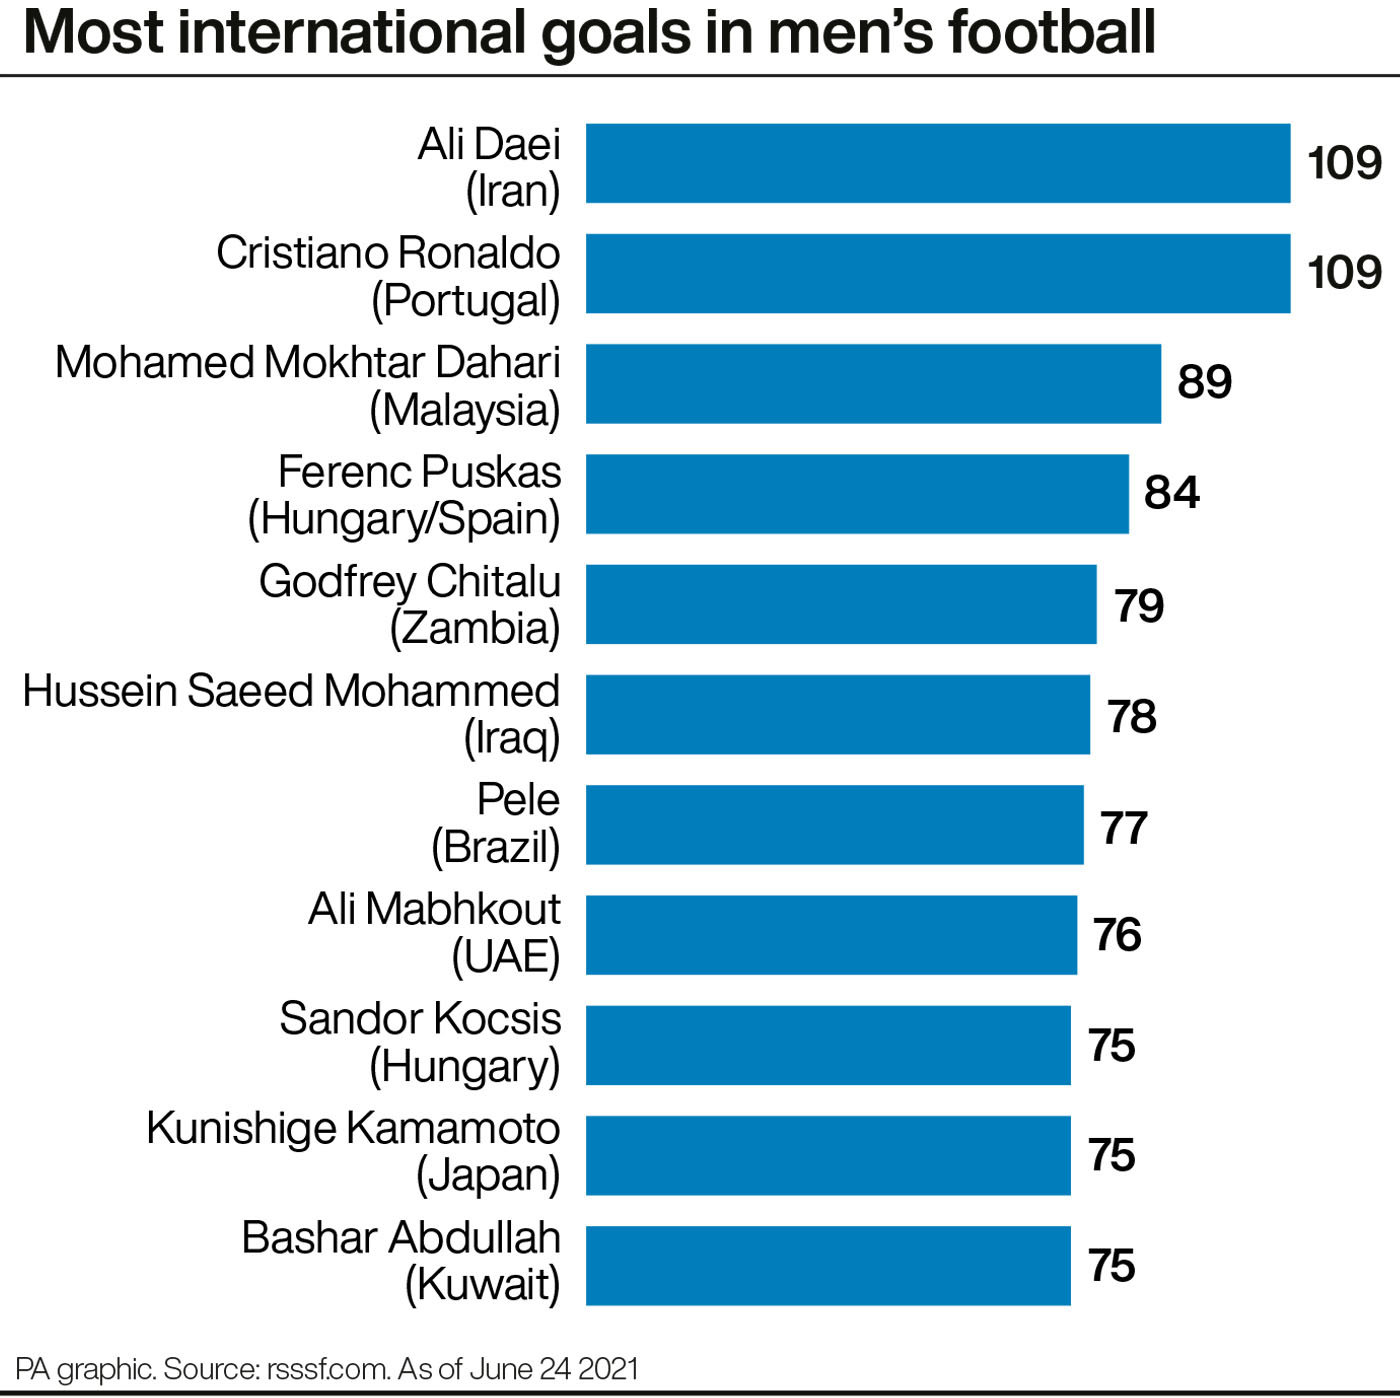 Leading goalscorers in men's international football